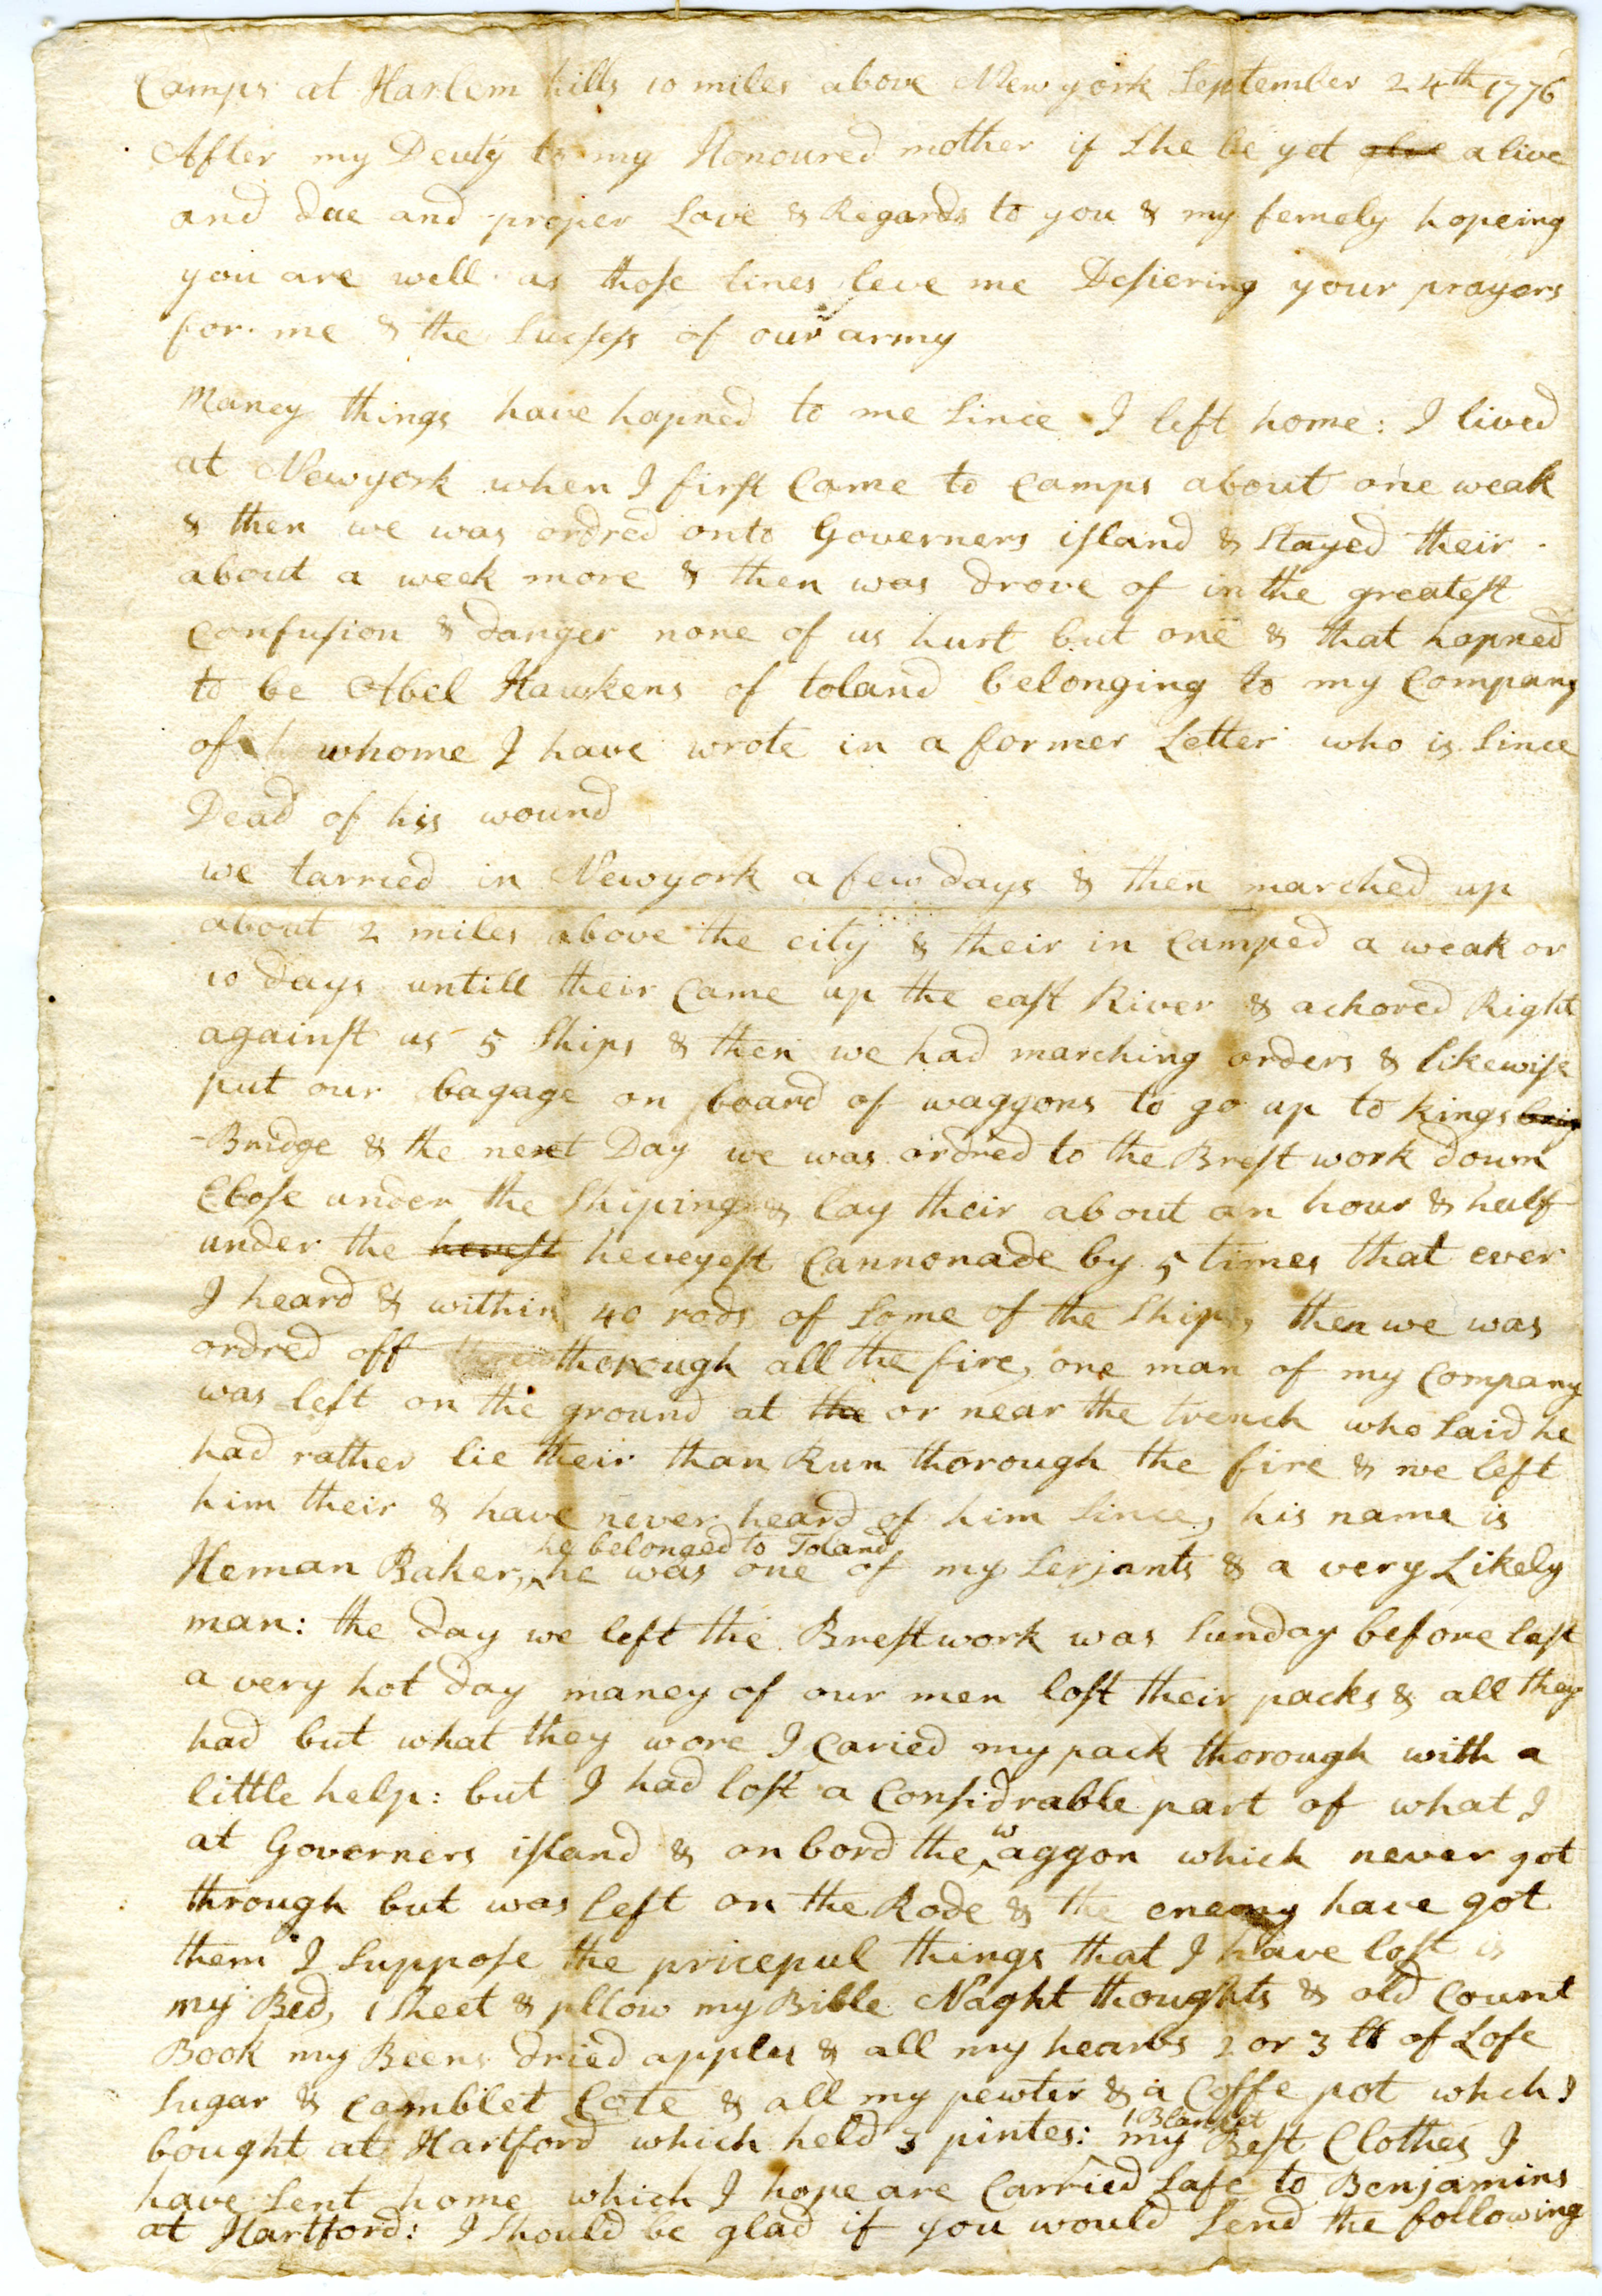 Jonathan Birge to Priscilla Birge, September 24, 1776